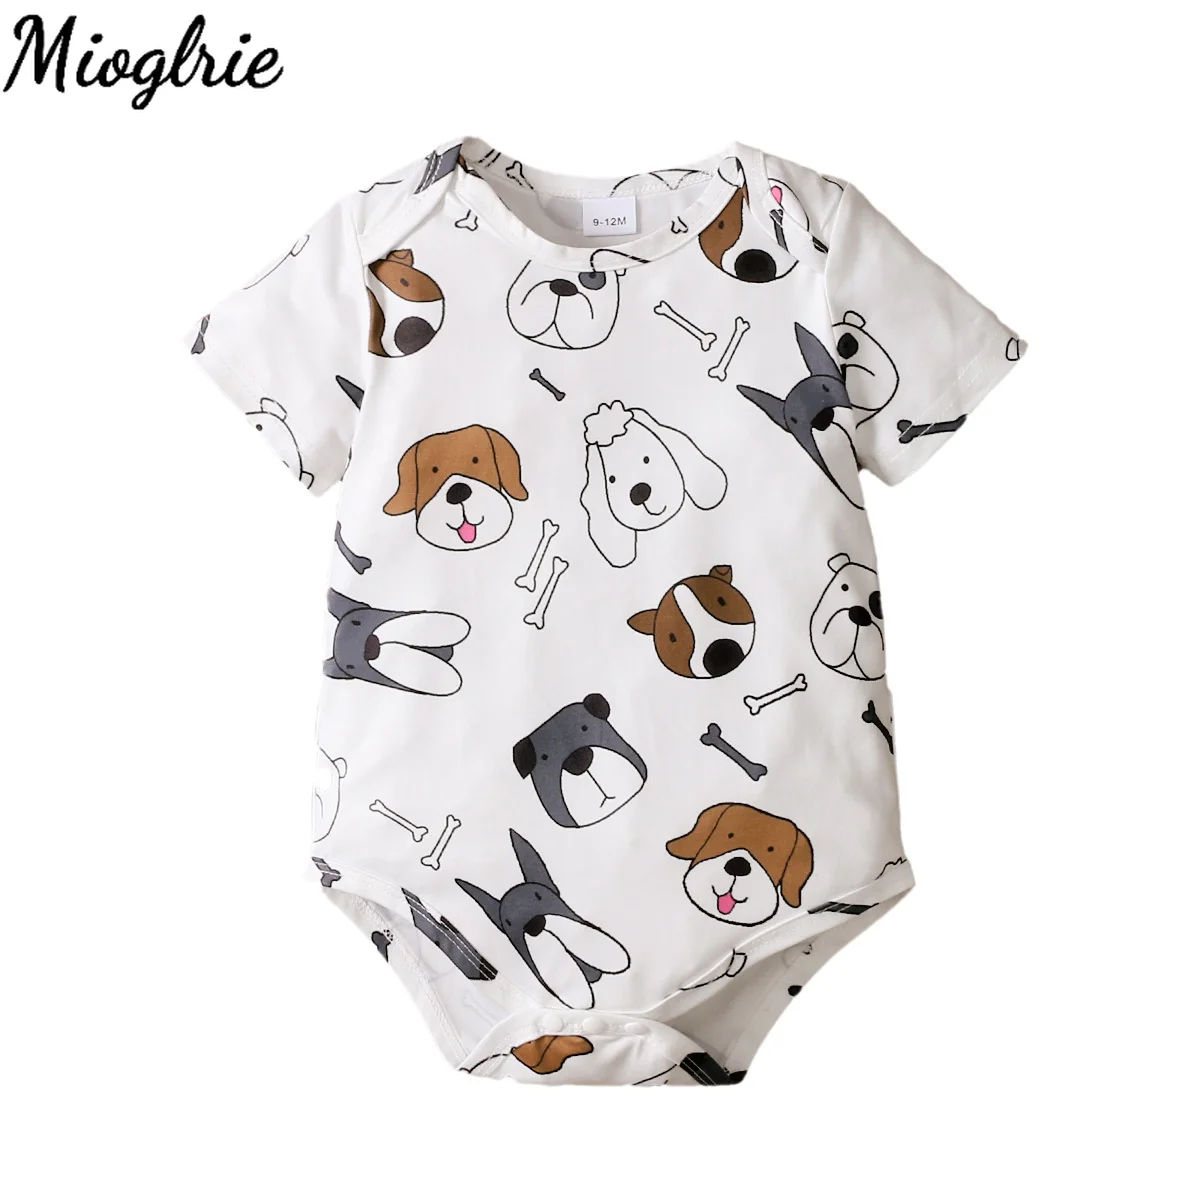 

Newborn Baby Boy Romper Short Sleeves Print Bodysuit baju Baby Boy Jumpsuit Infant Baby Boy Outfit